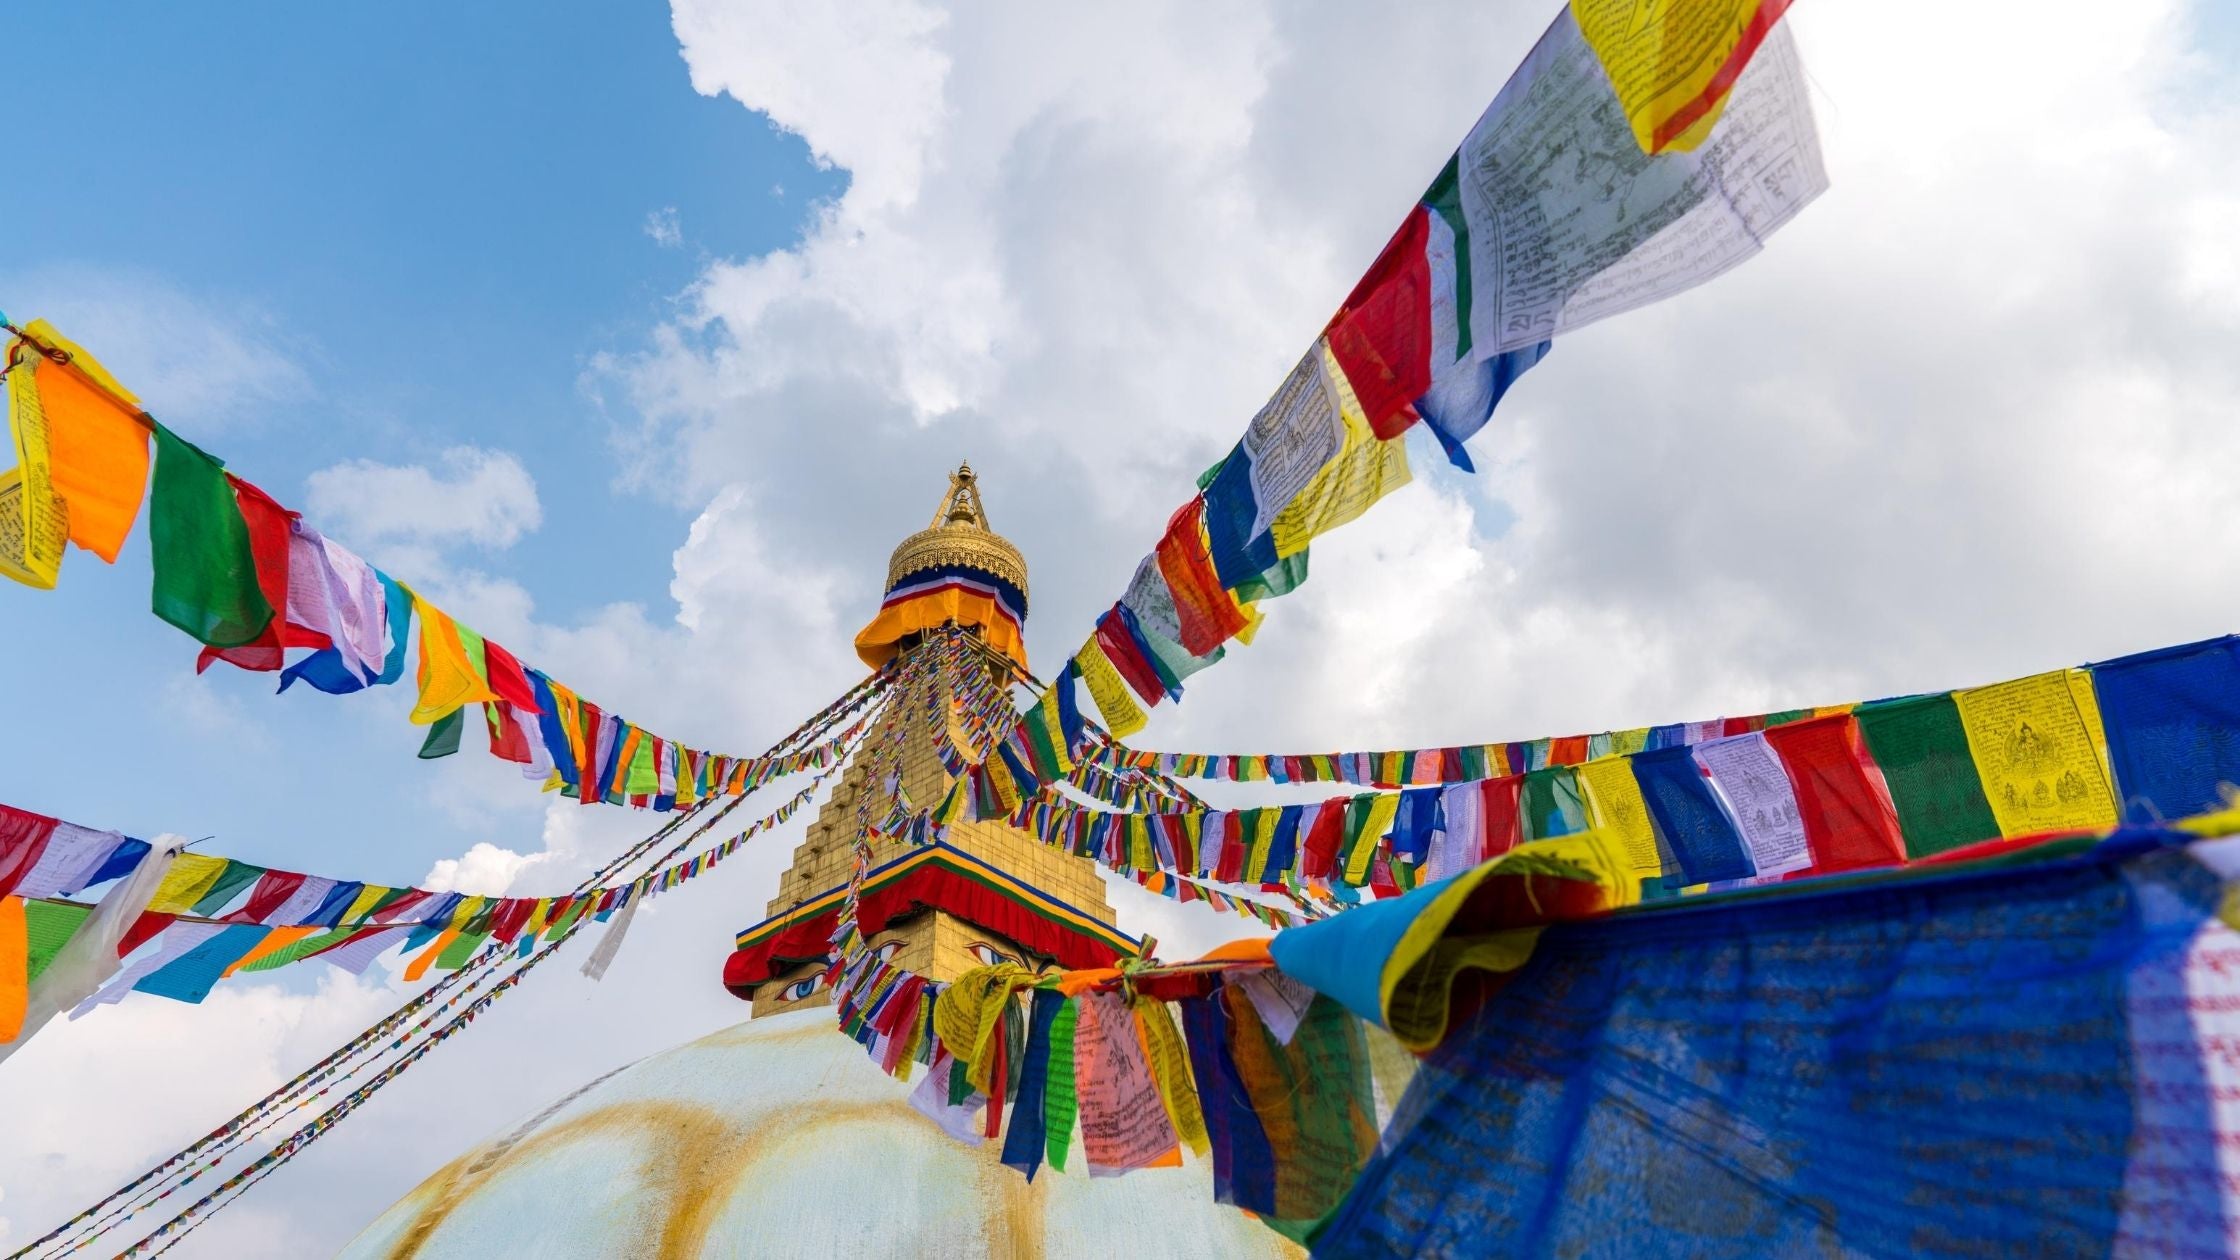 Surya Australia Tibetan Prayer Flags in Nepal Boudhnath Stupa